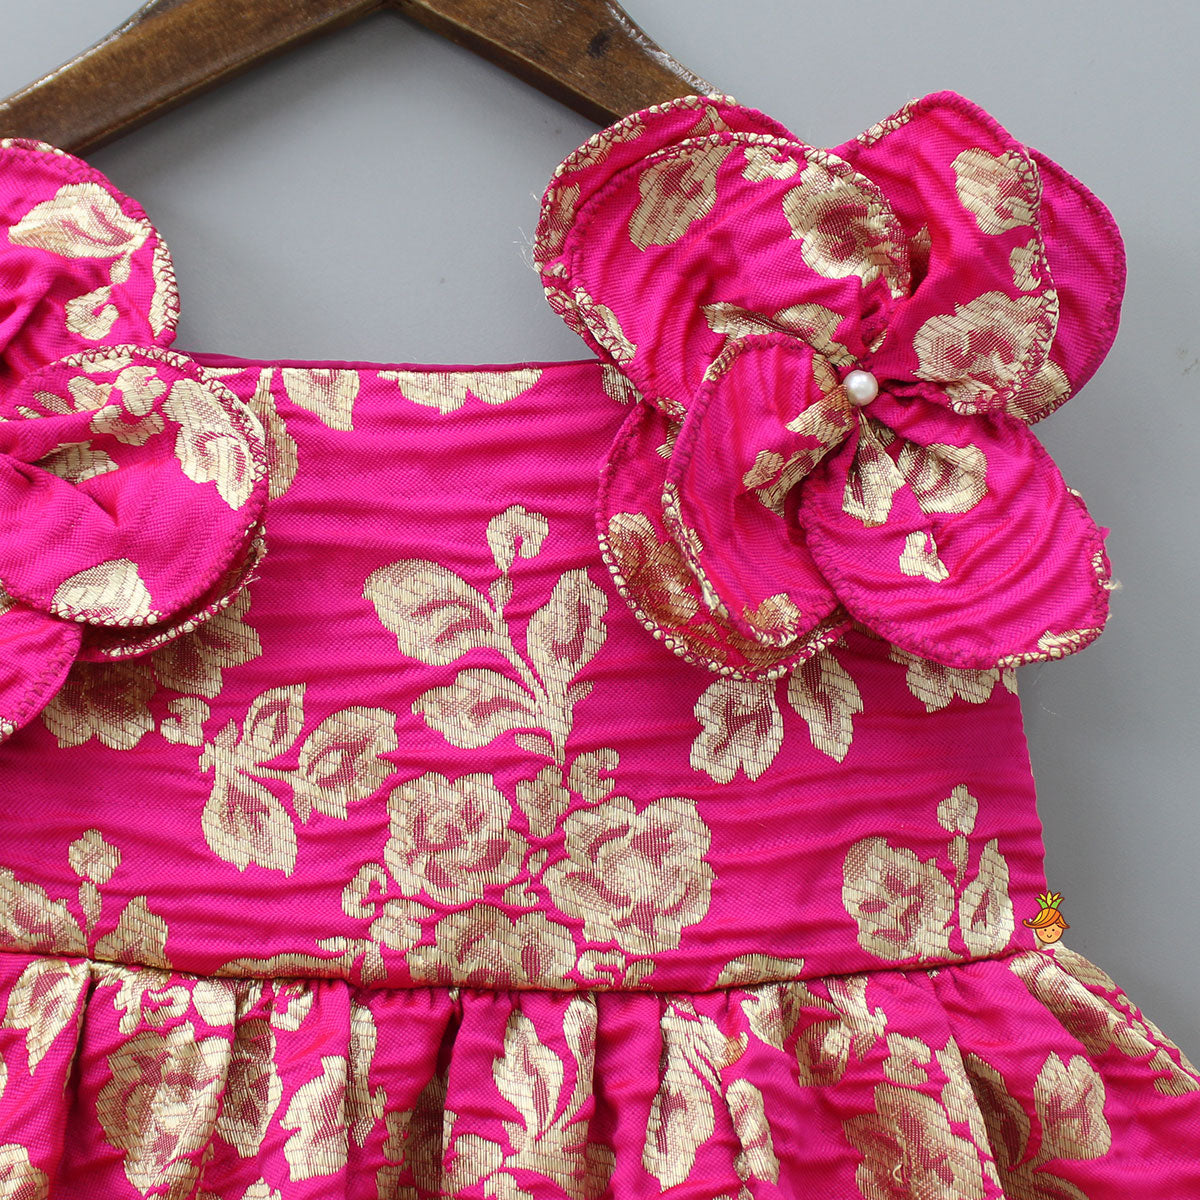 Floral Brocade Embroidered Pink Dress